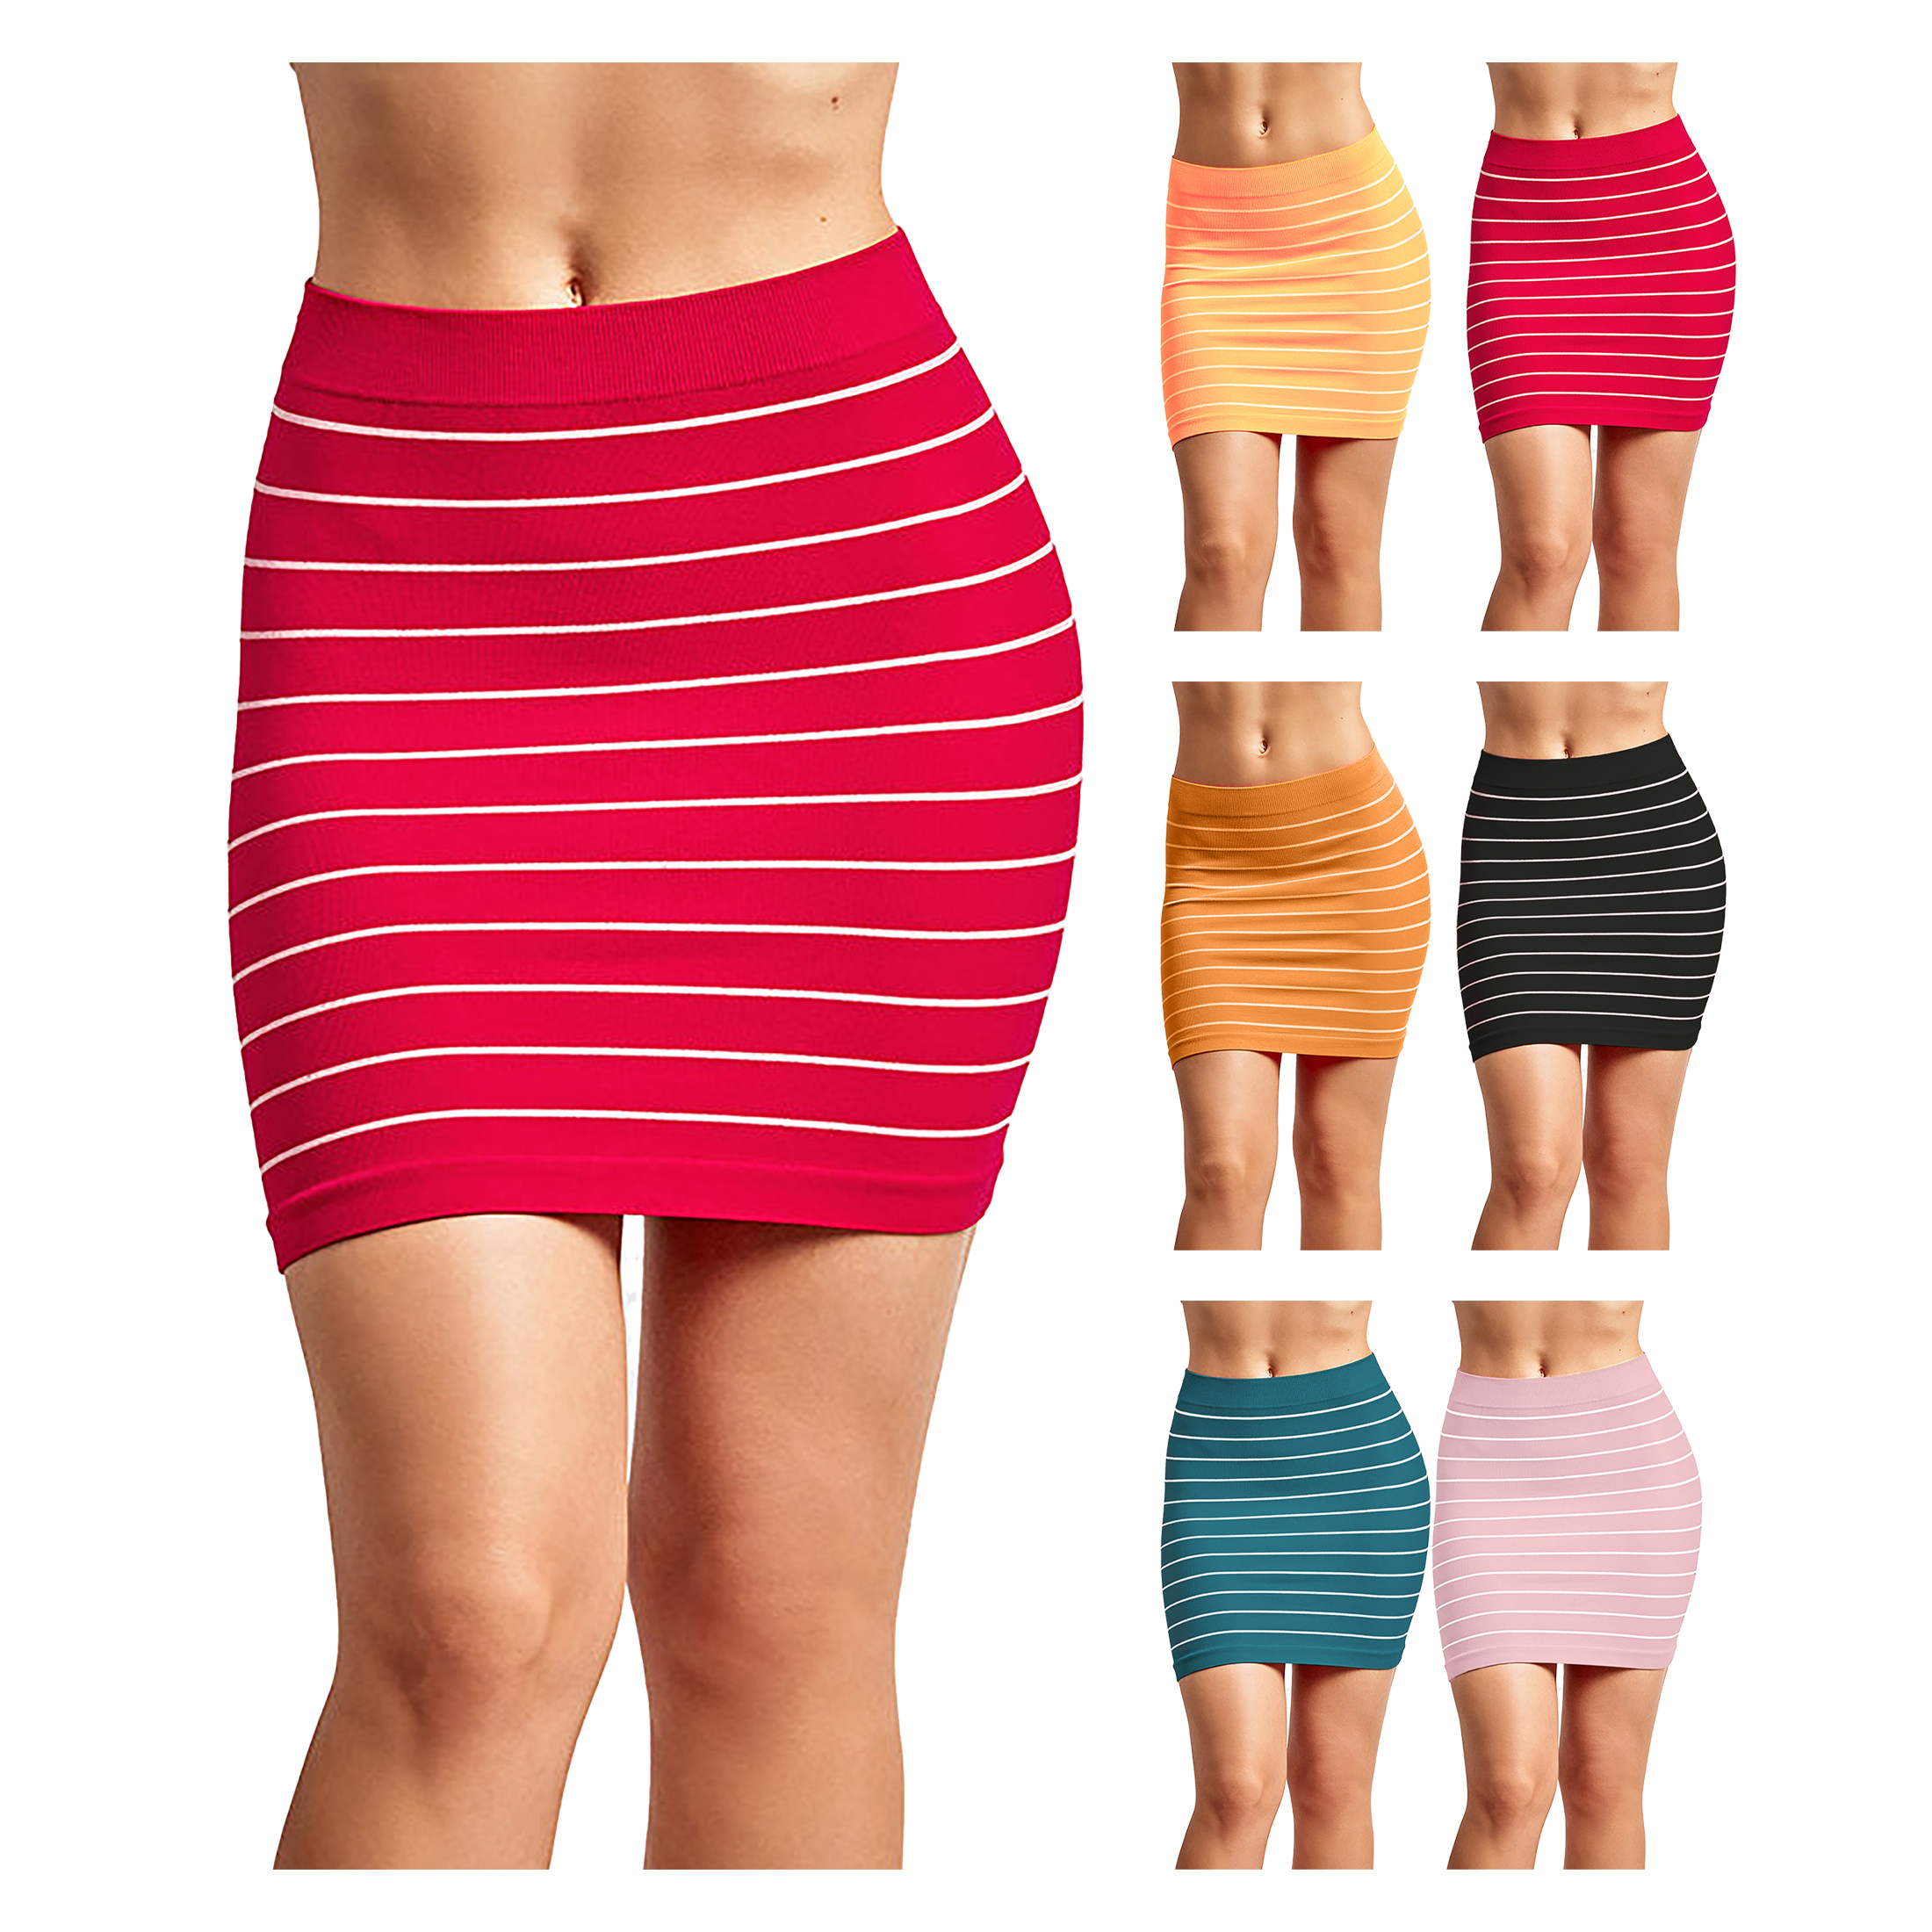 3-Pack: Women's Striped Seamless Microfiber Slim Nylon Pull-On Closure Mini Skirts - Medium